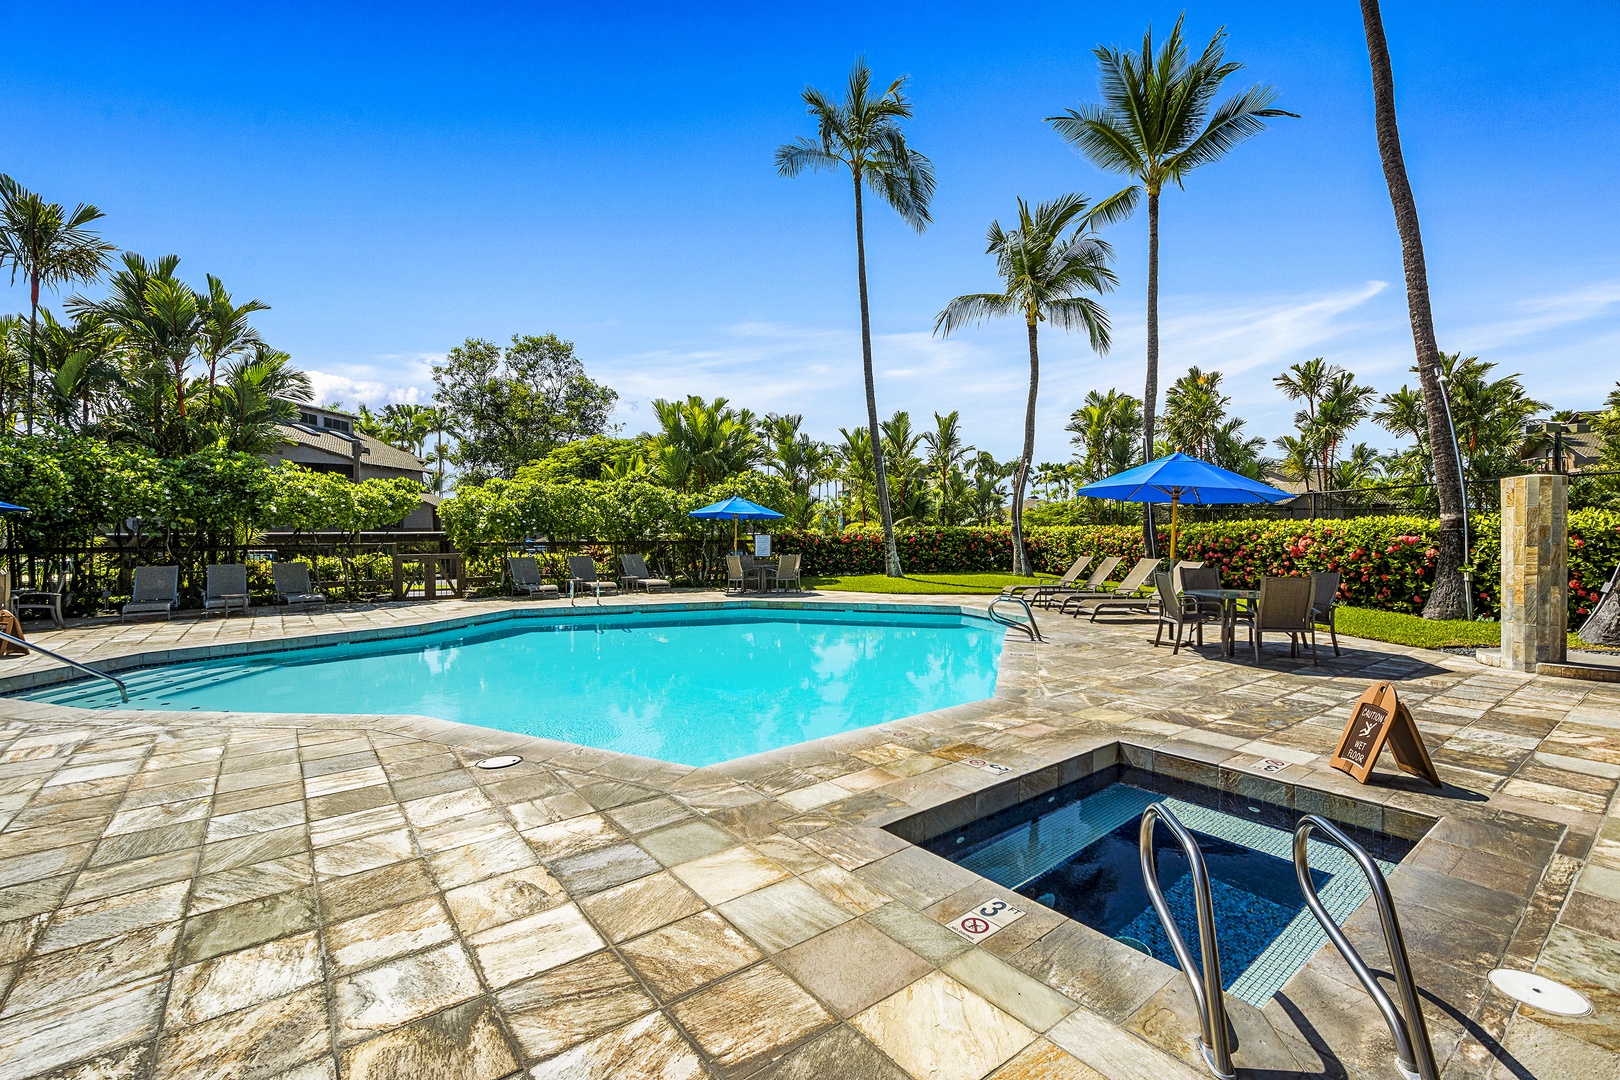 Kailua Kona Vacation Rentals, Kanaloa at Kona 1606 - Enjoy the hot tub or take a dip in the pool!